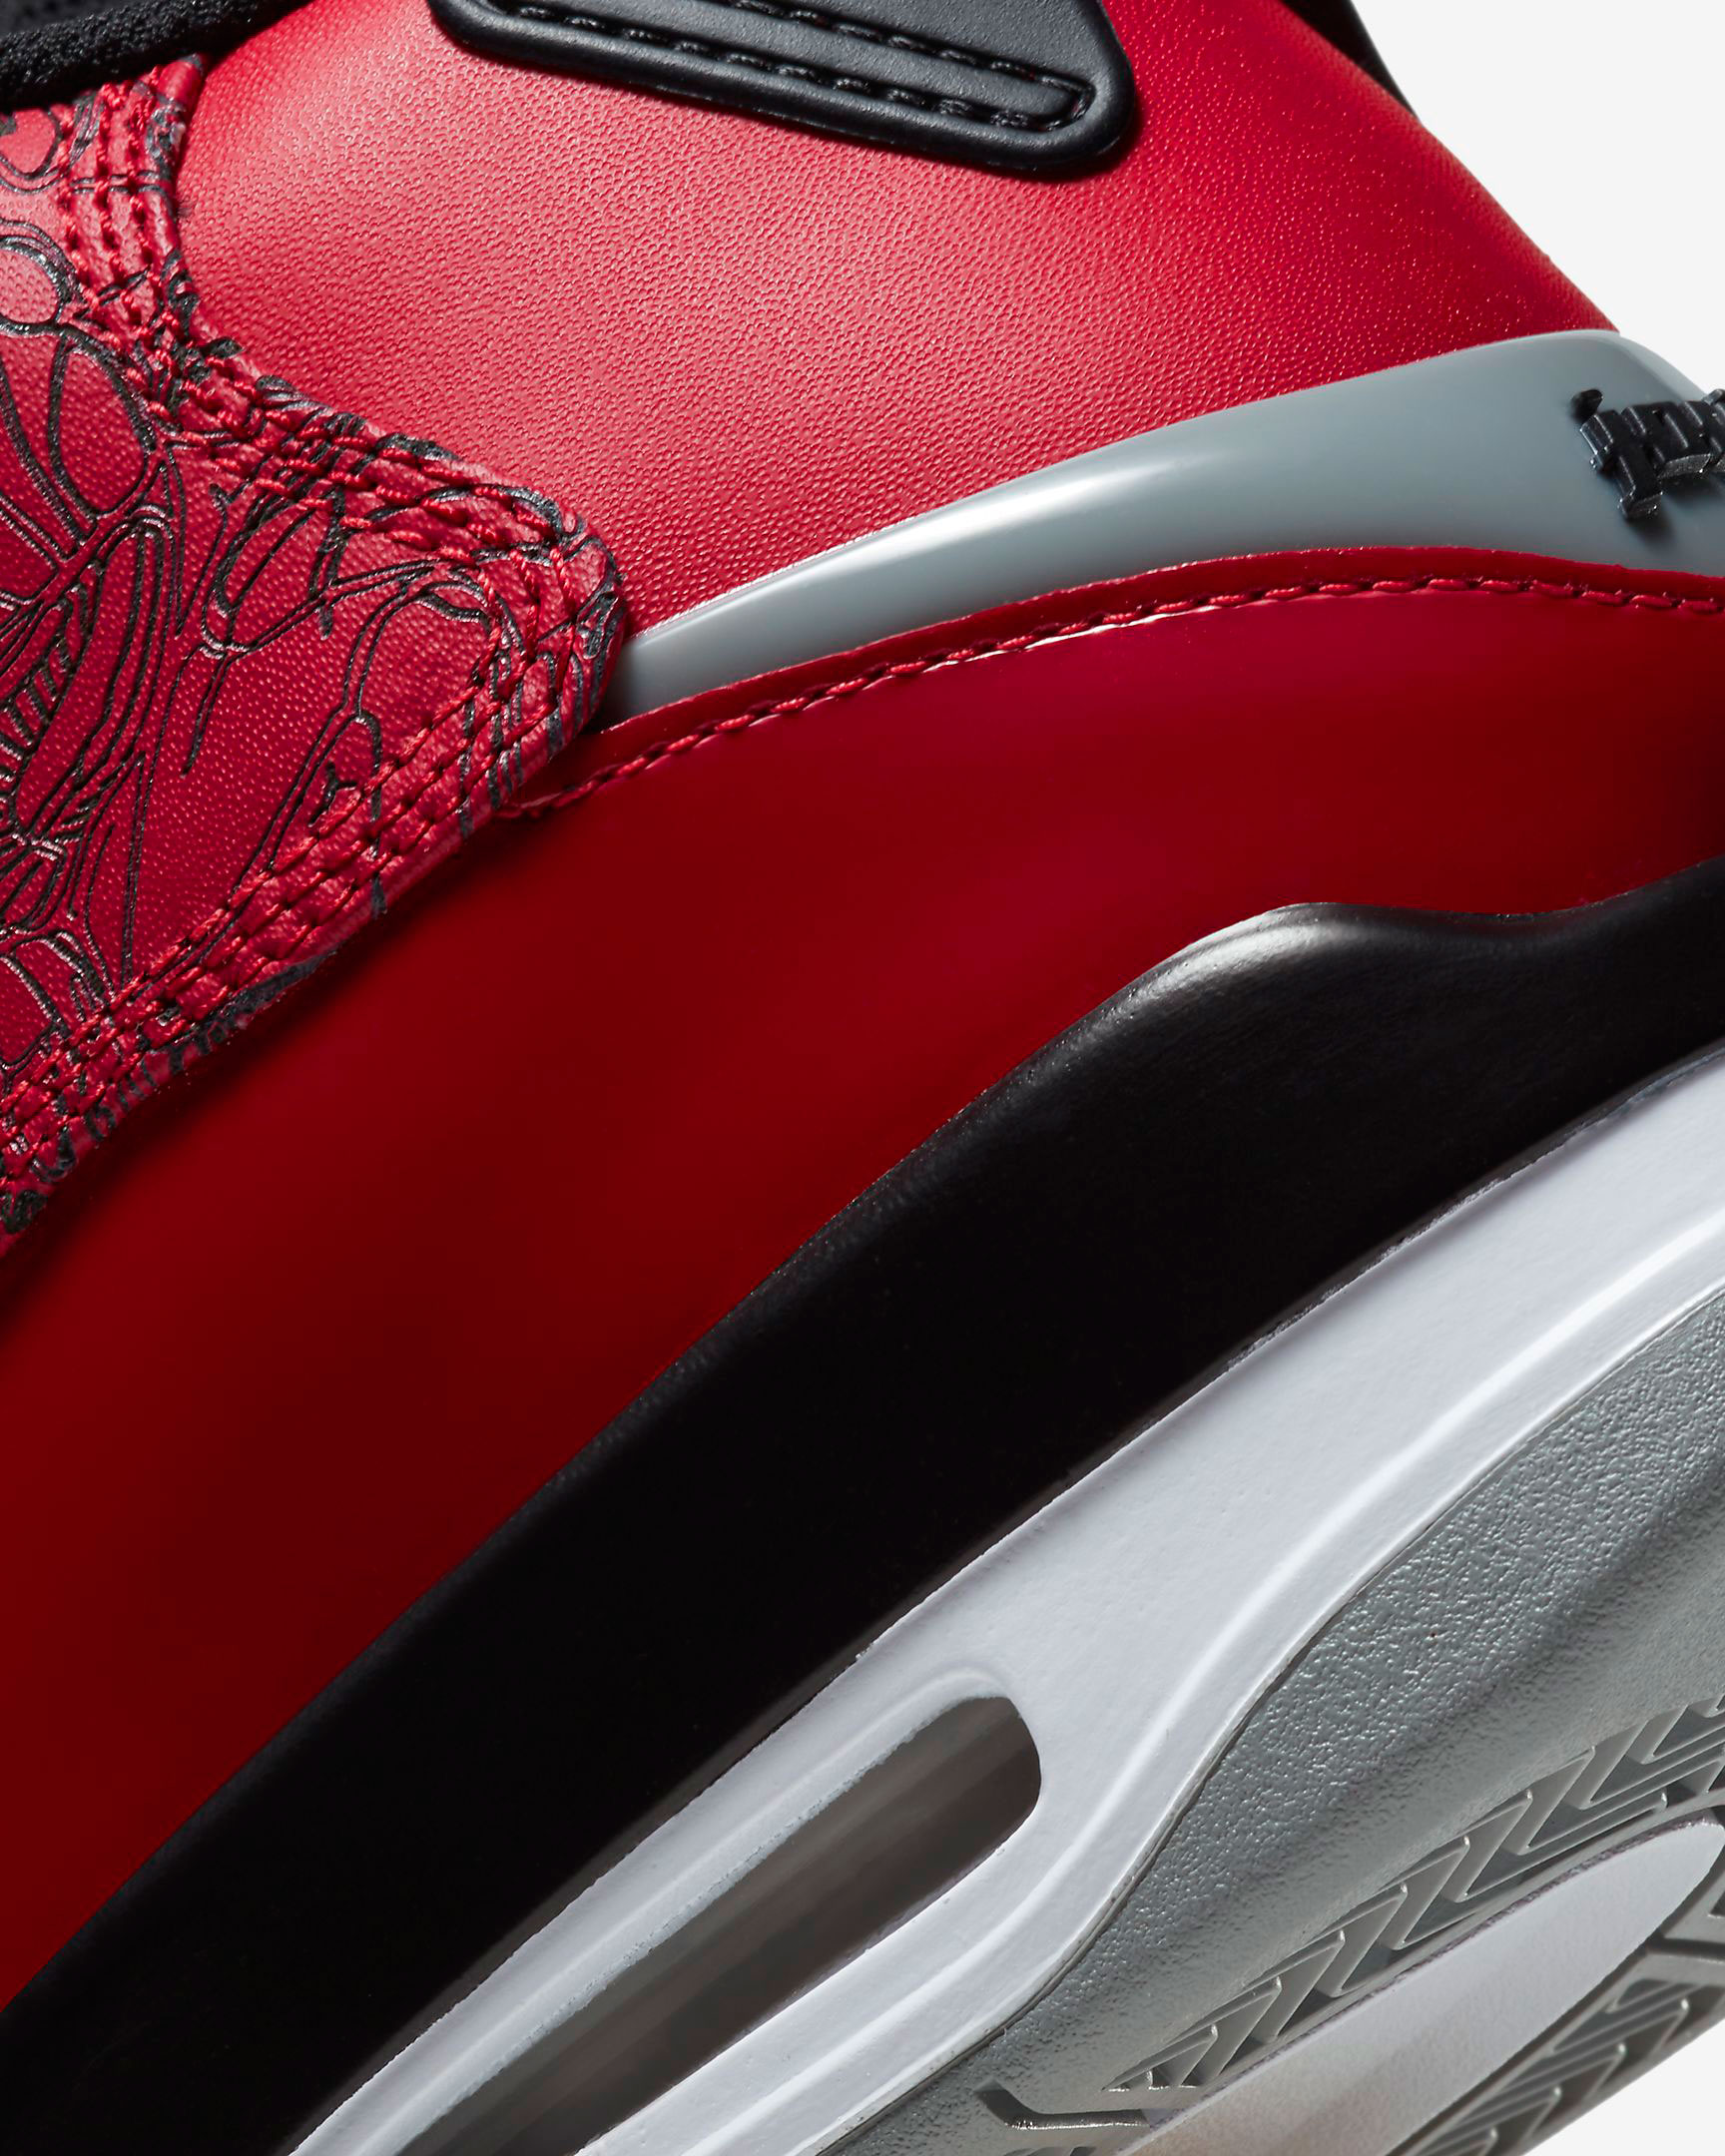 Jordan Dub Zero Toro Gym Red Available Now | SneakerFits.com